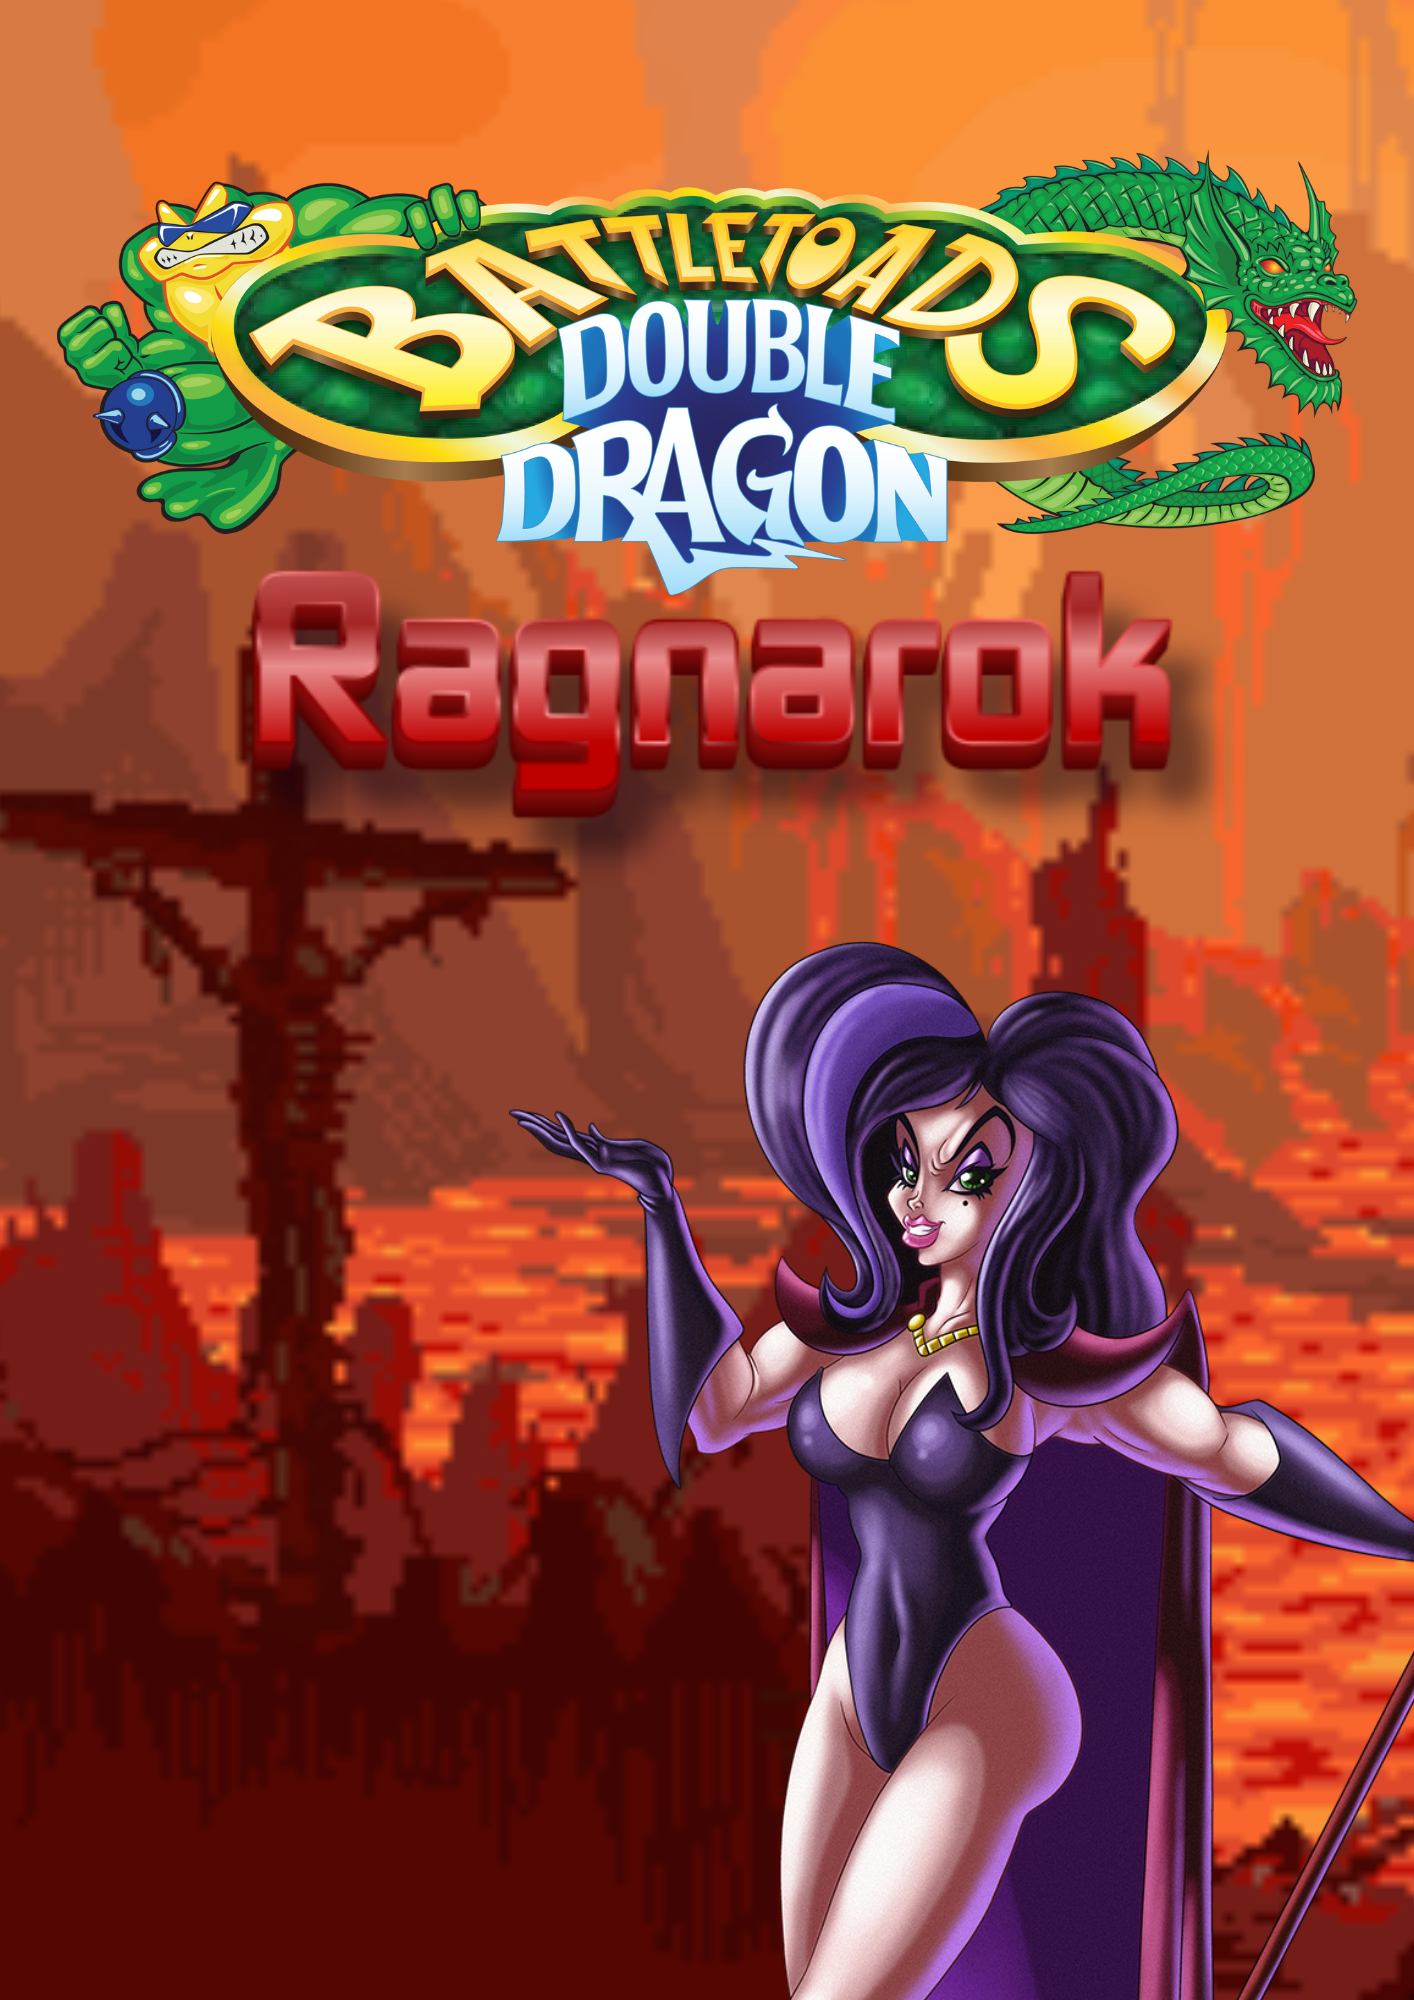 Battletoads & Double Dragon - On Ragnarok (U) [v2.2]